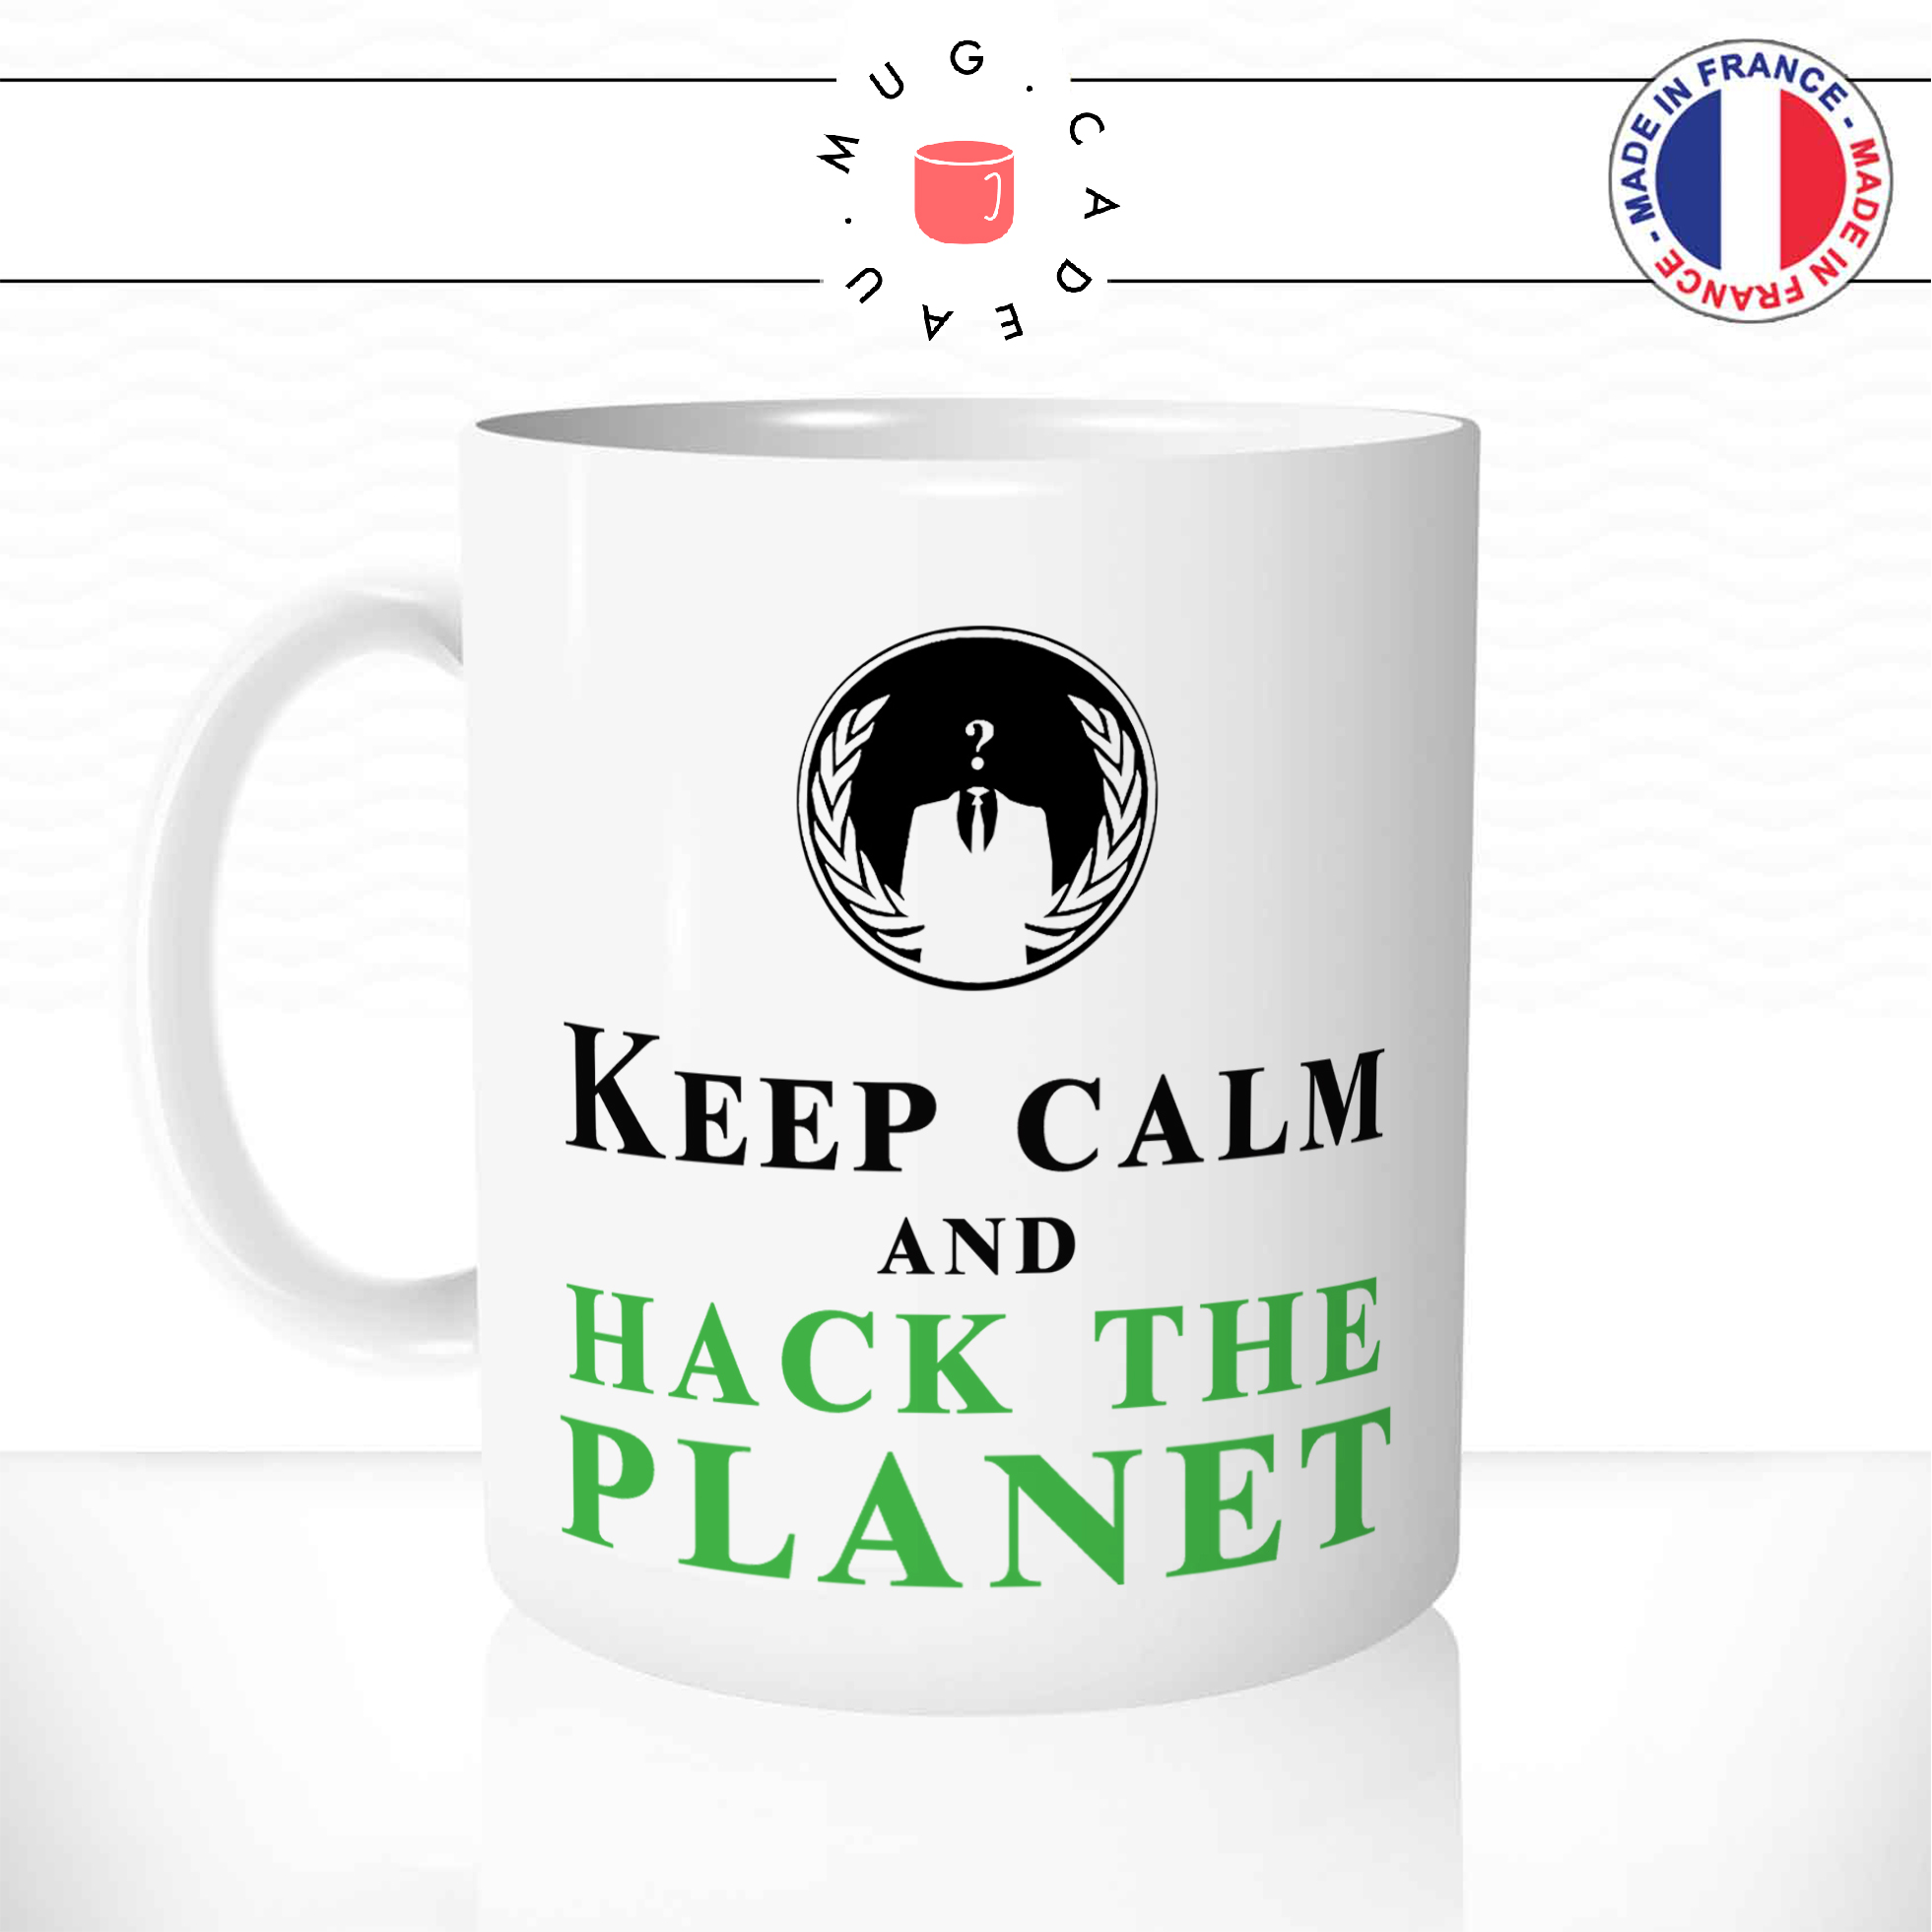 mug-tasse-ref5-keep-calm-and-hack-the-planet-cafe-the-mugs-tasses-personnalise-anse-gauche